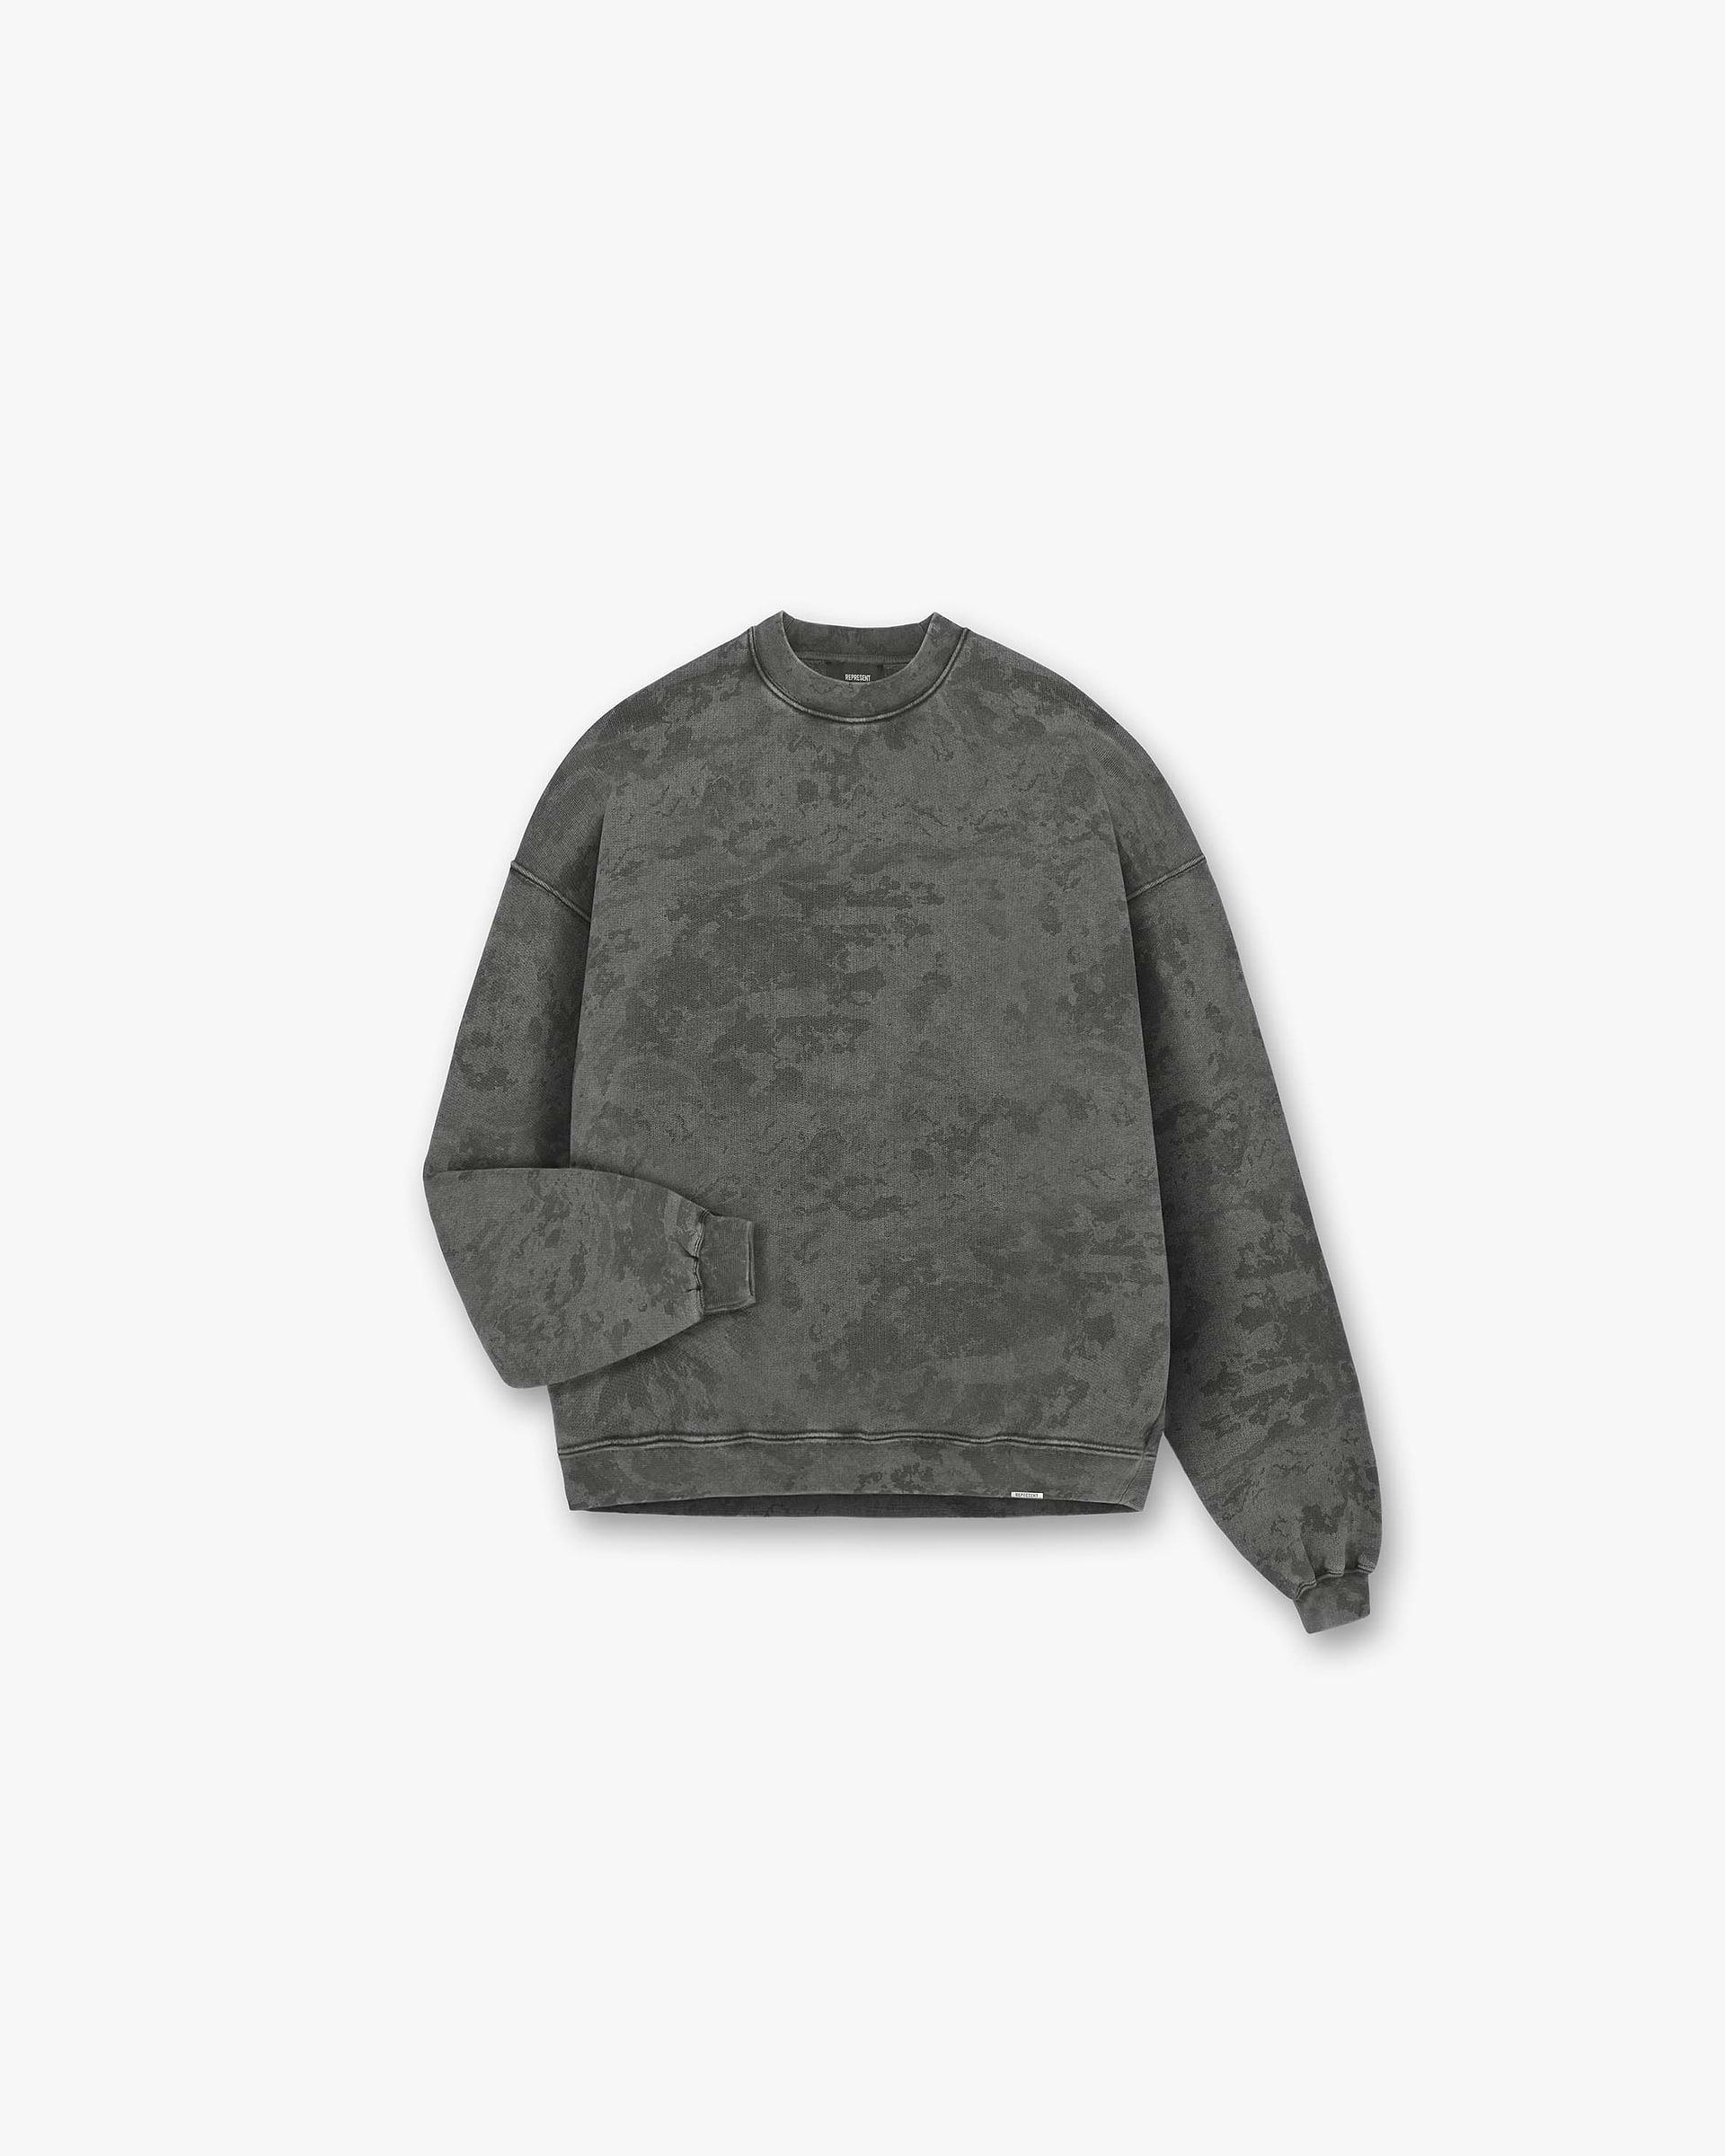 Heavyweight Initial Sweater - Fade Out Camo